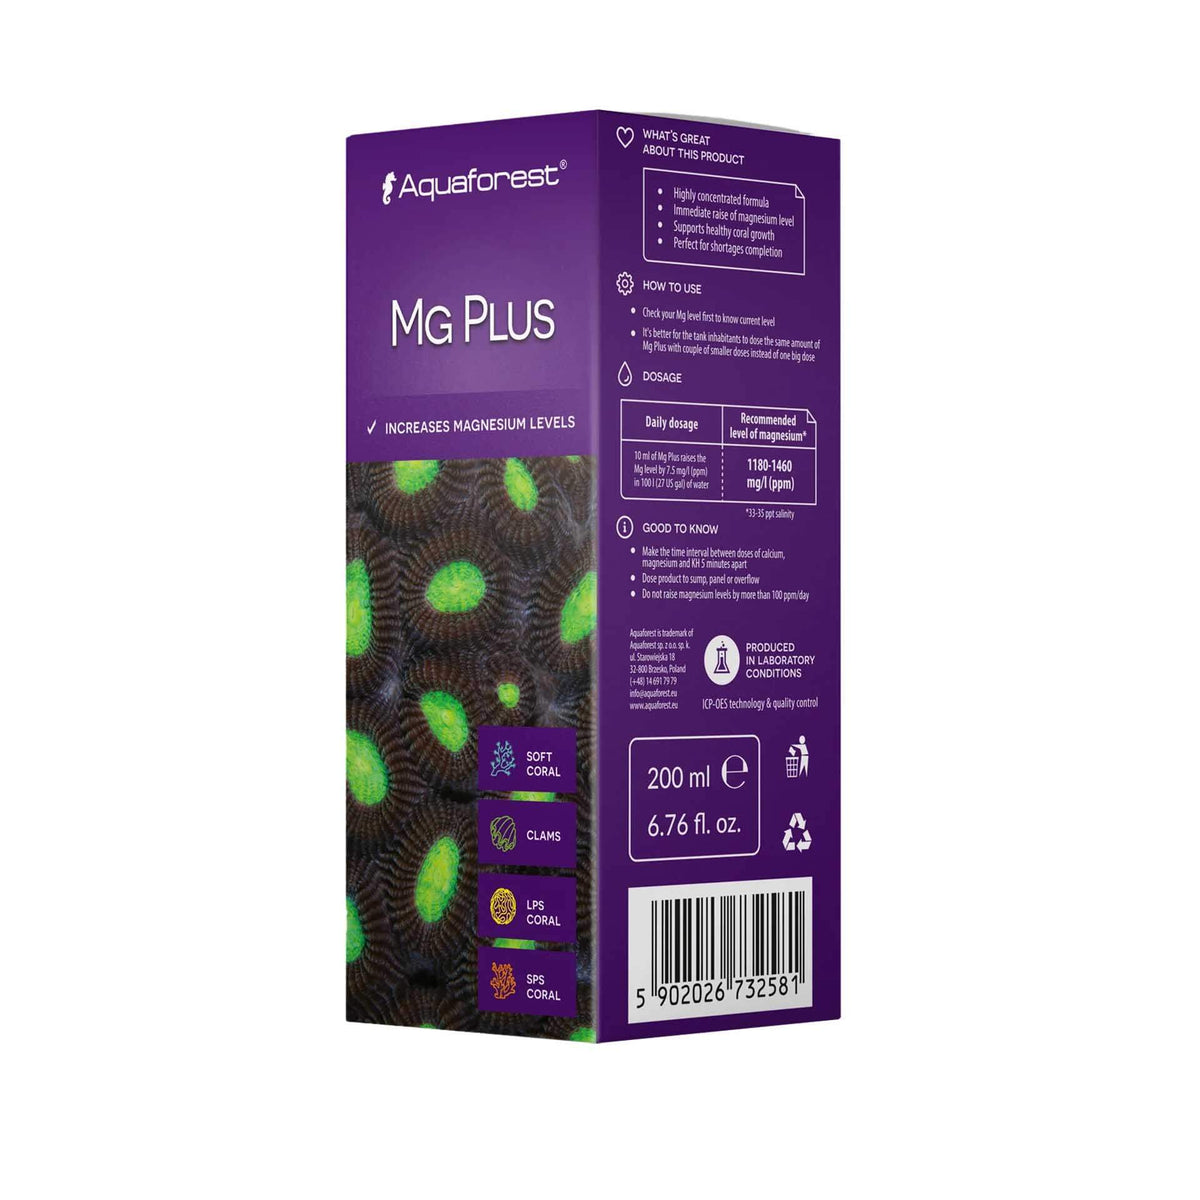 Aquaforest Mg Plus 200ml - Magnesium - Extra 50ml for FREE!